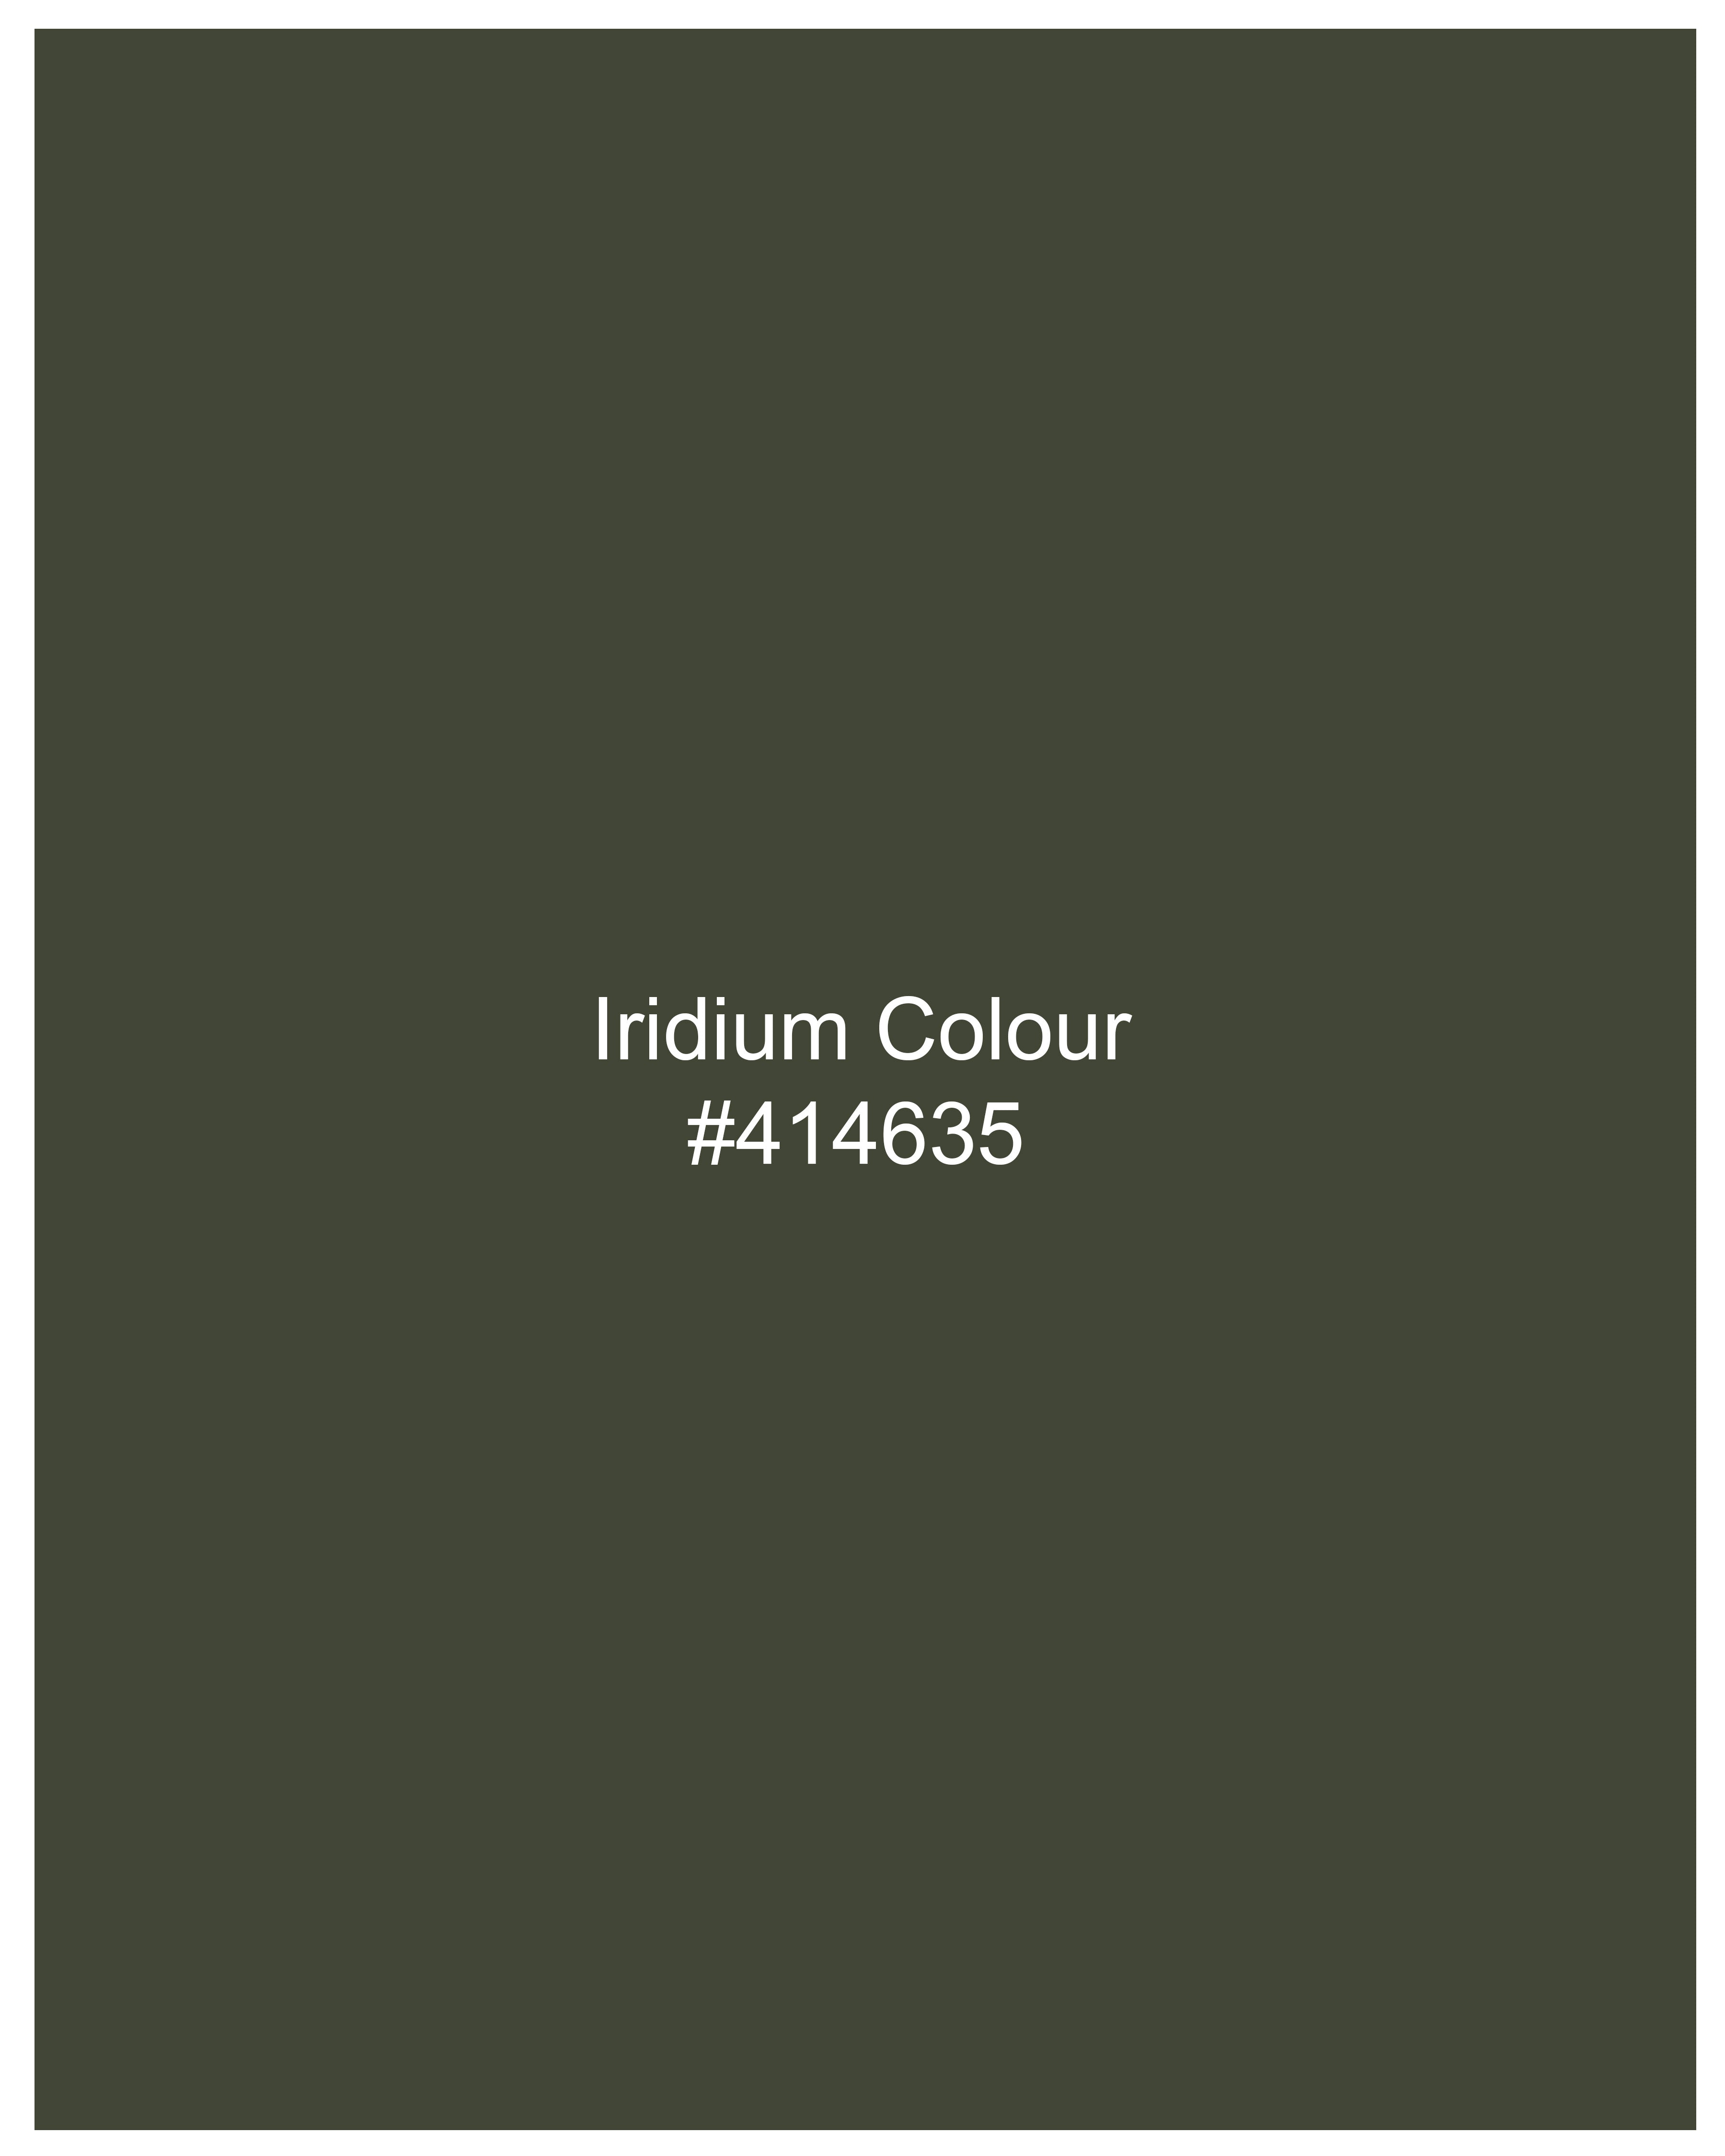 Iridium Green With White Double Collar  Royal Oxford Designer Shirt 9786-P442-38, 9786-P442-H-38, 9786-P442-39, 9786-P442-H-39, 9786-P442-40, 9786-P442-H-40, 9786-P442-42, 9786-P442-H-42, 9786-P442-44, 9786-P442-H-44, 9786-P442-46, 9786-P442-H-46, 9786-P442-48, 9786-P442-H-48, 9786-P442-50, 9786-P442-H-50, 9786-P442-52, 9786-P442-H-52